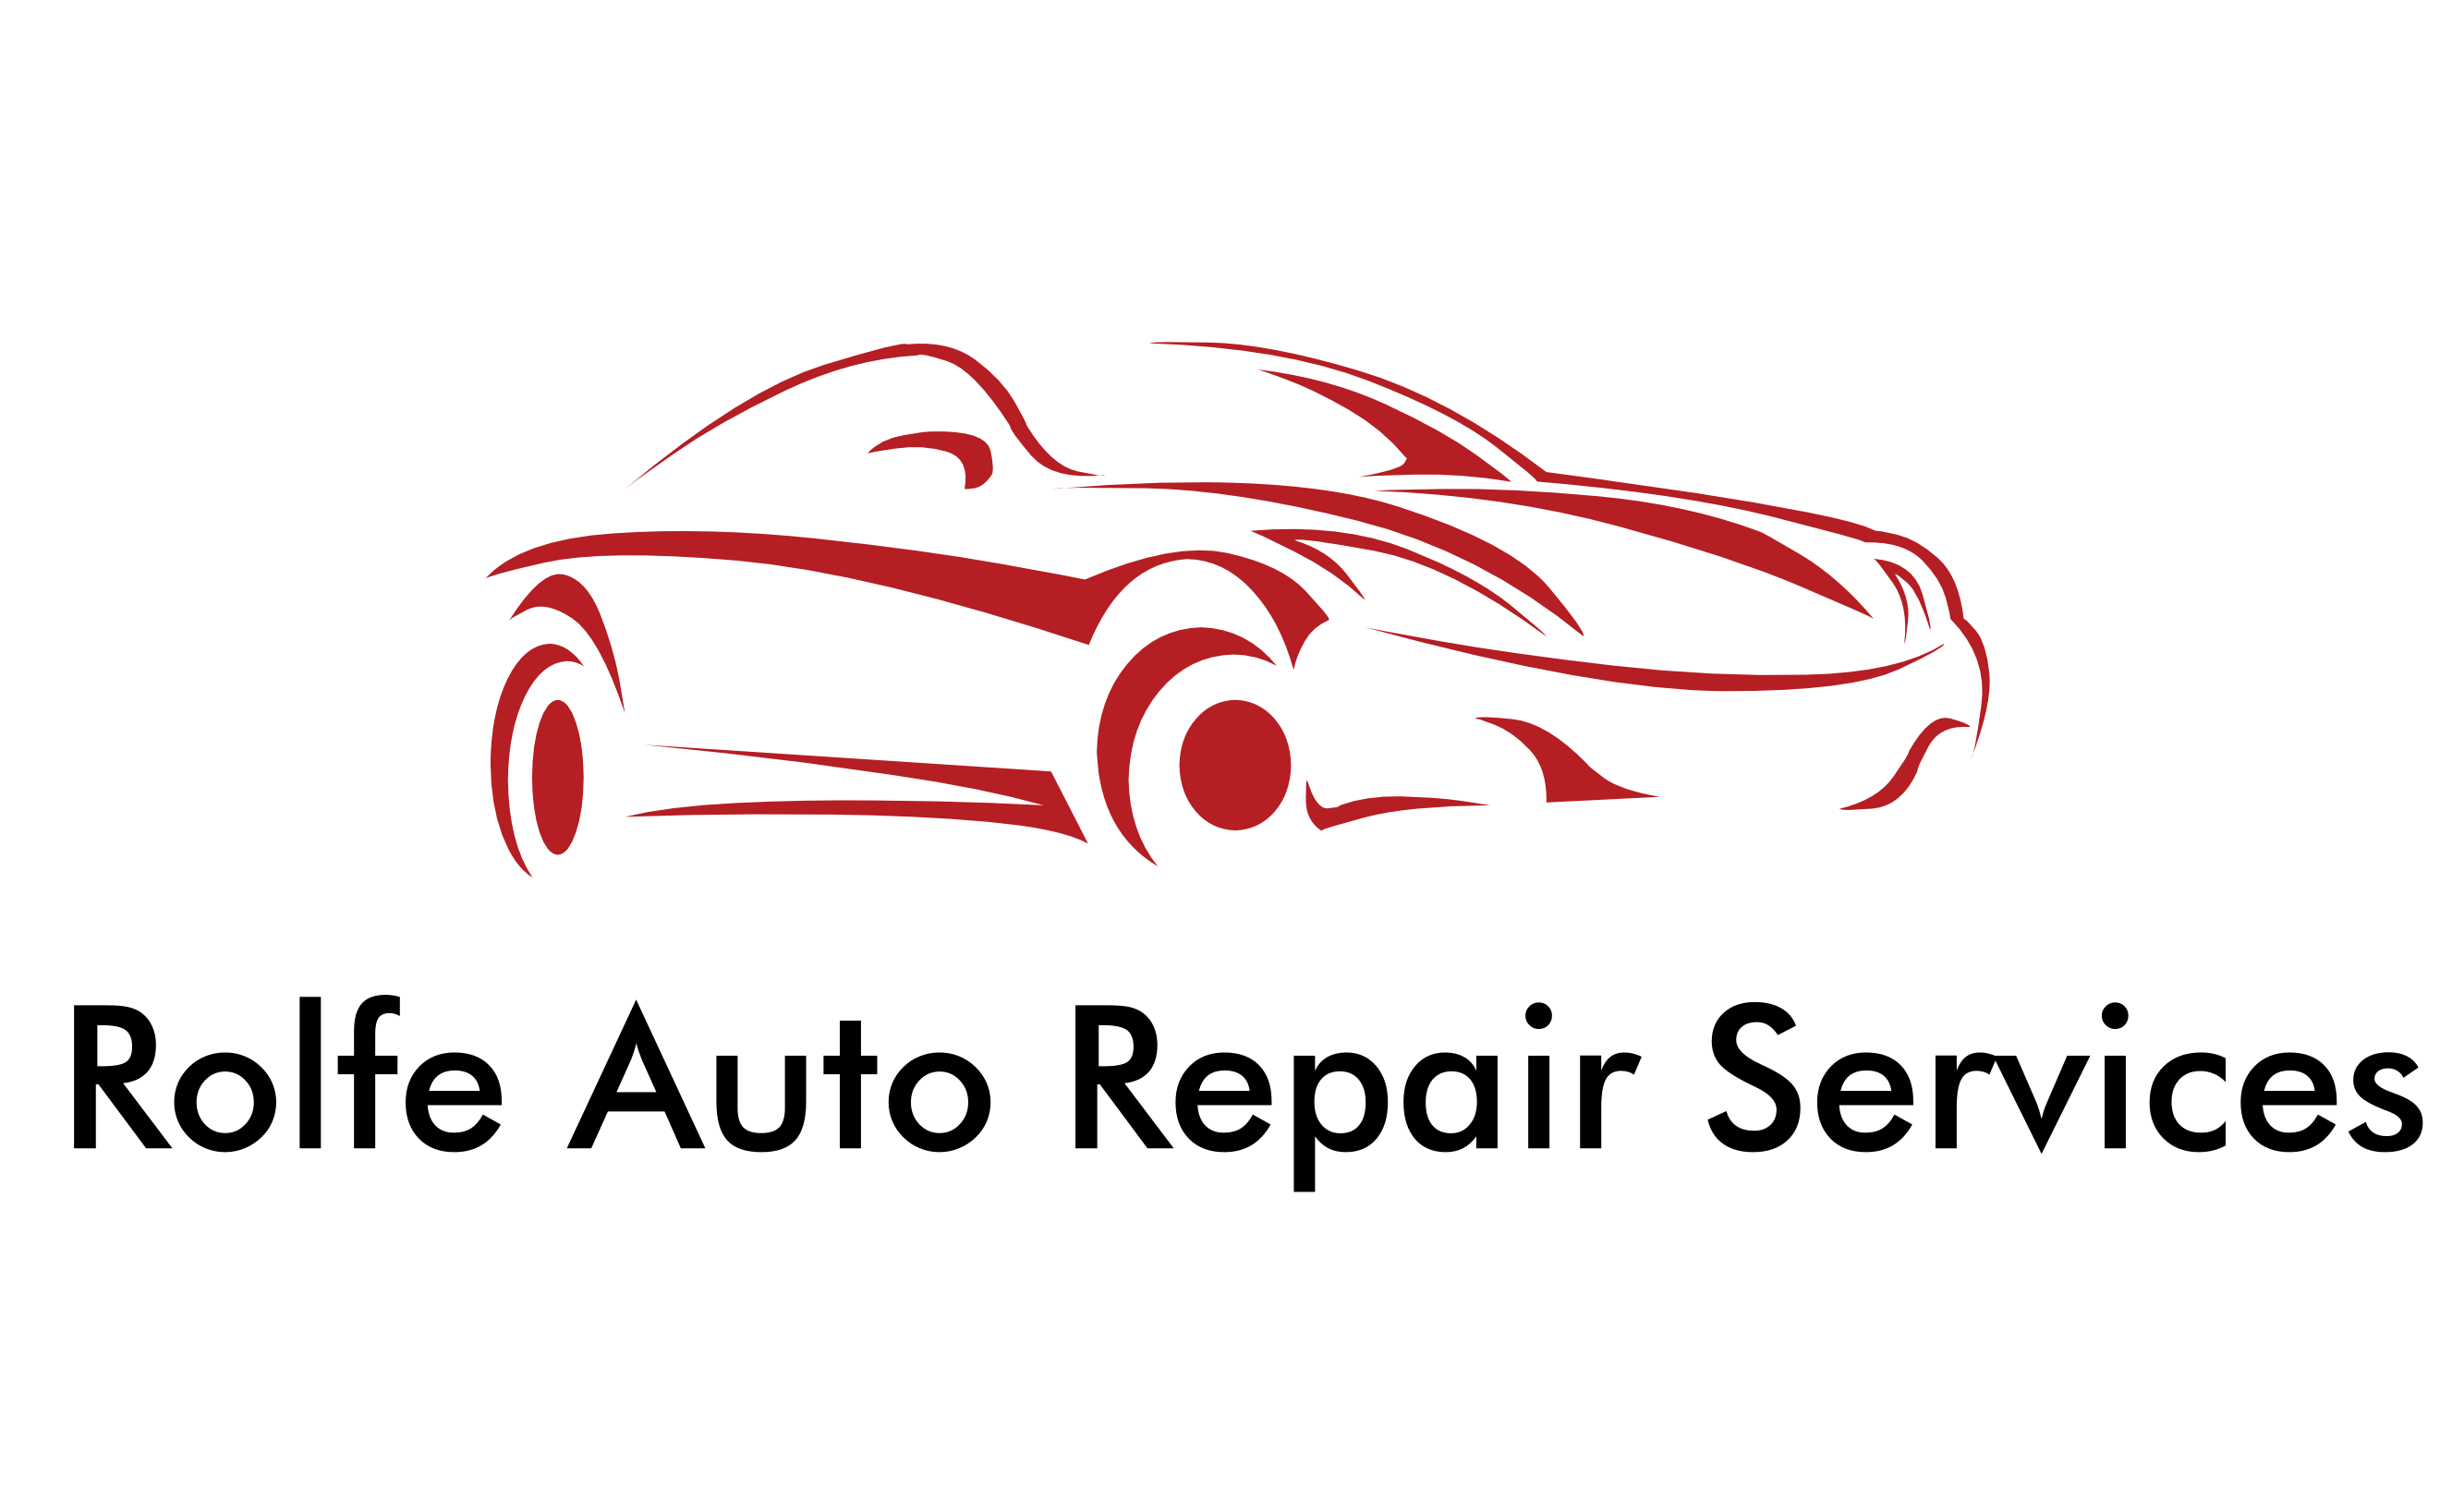 Auto Repair Logo - Rolfe Auto Repair Services Mechanical Repairs, Vehicle Repairs ...